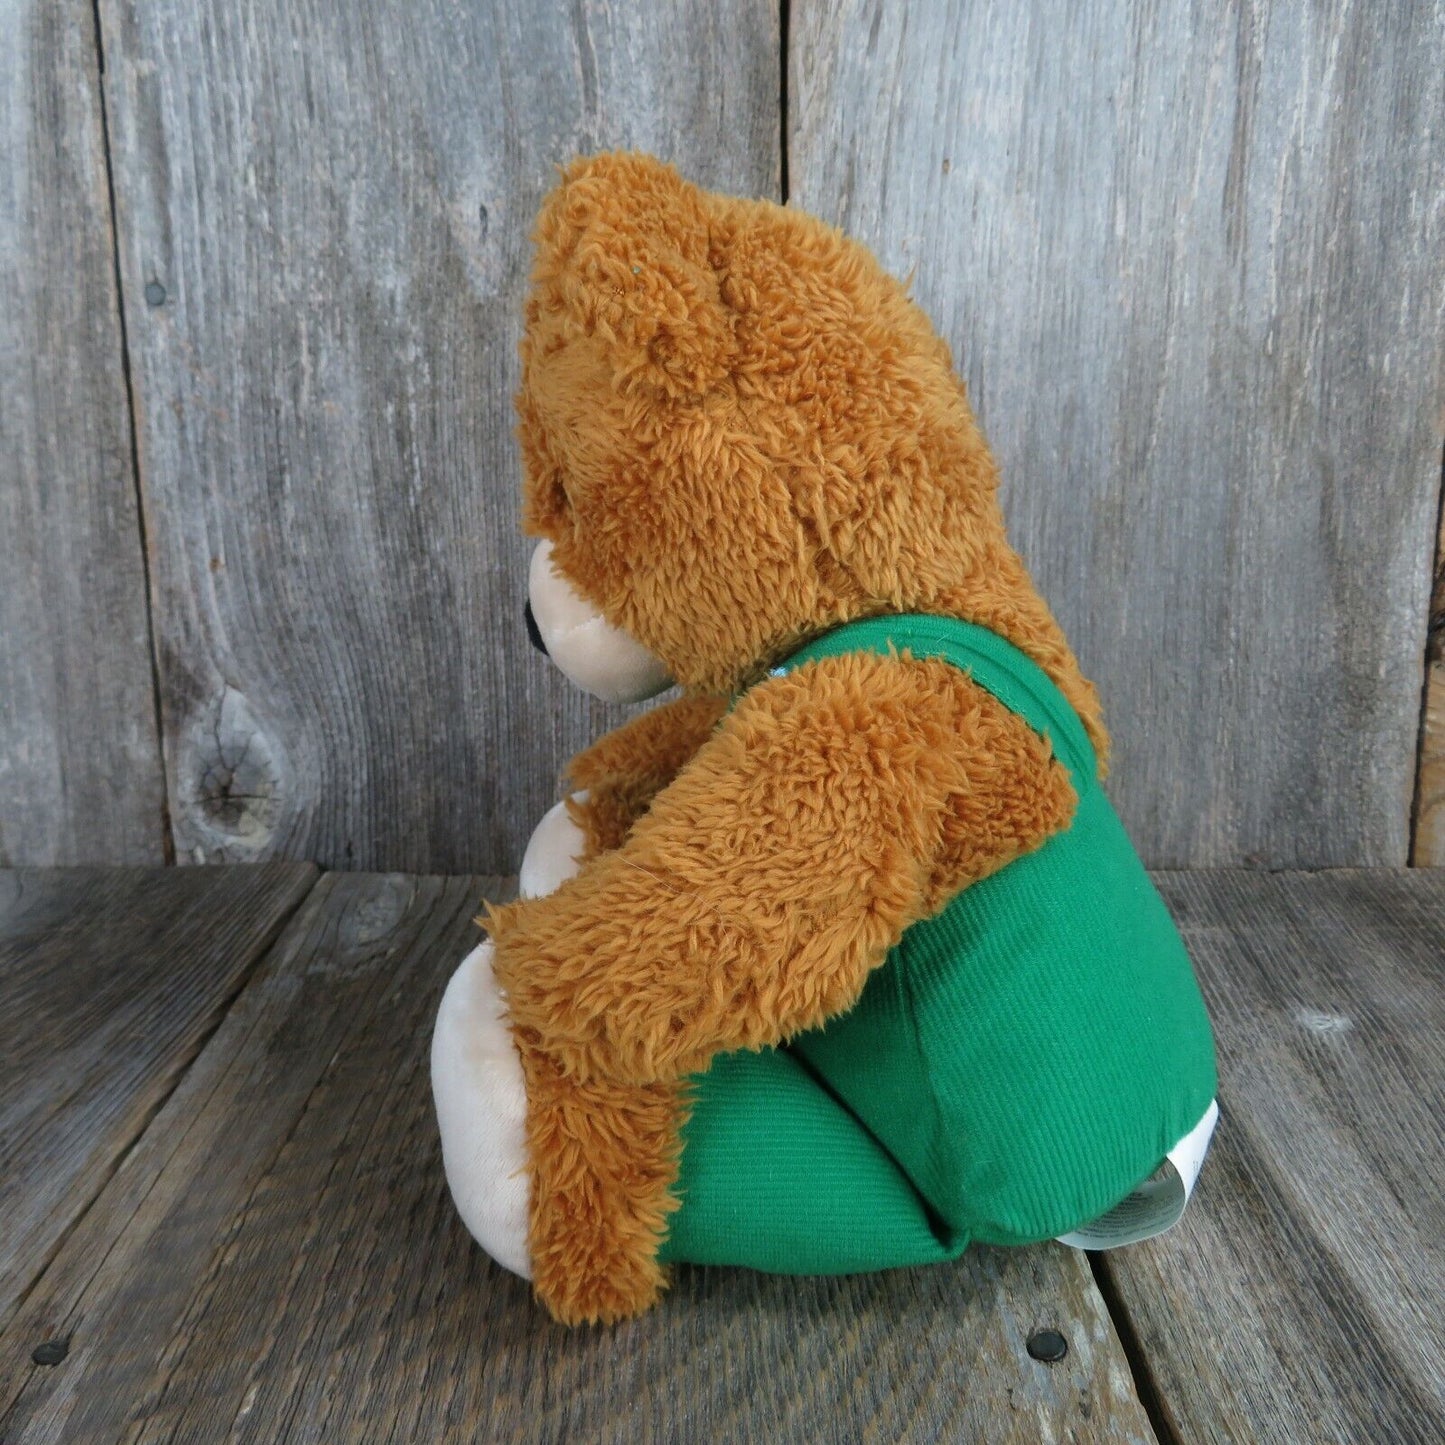 Kohls Cares Corduroy Teddy Bear Green Overalls Plush Stuffed Animal Toy 2016